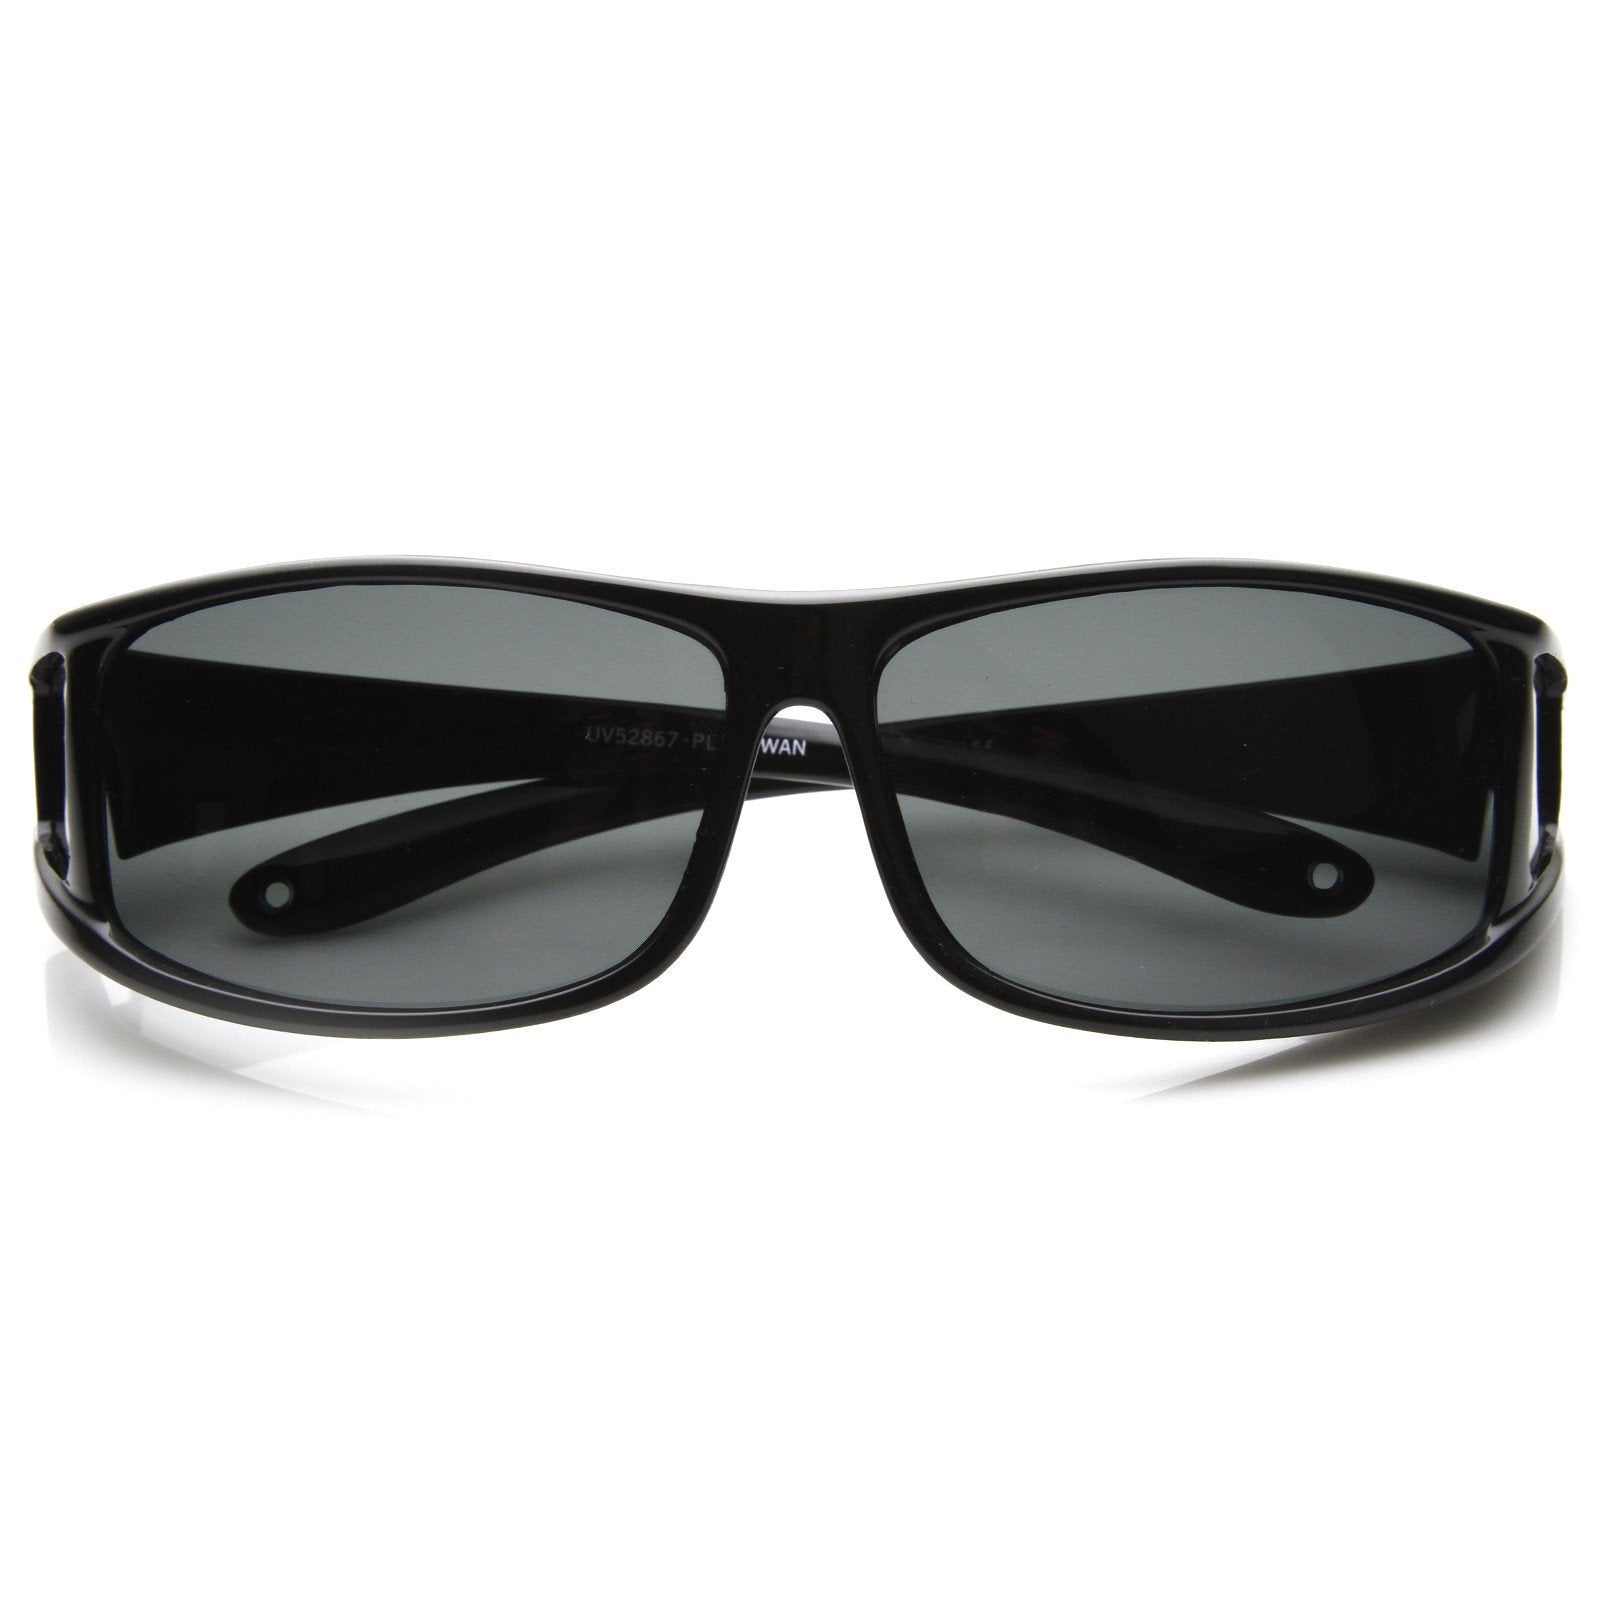 Full Wrap Around Protection Polarized Lens Sunglasses Goggles 8880